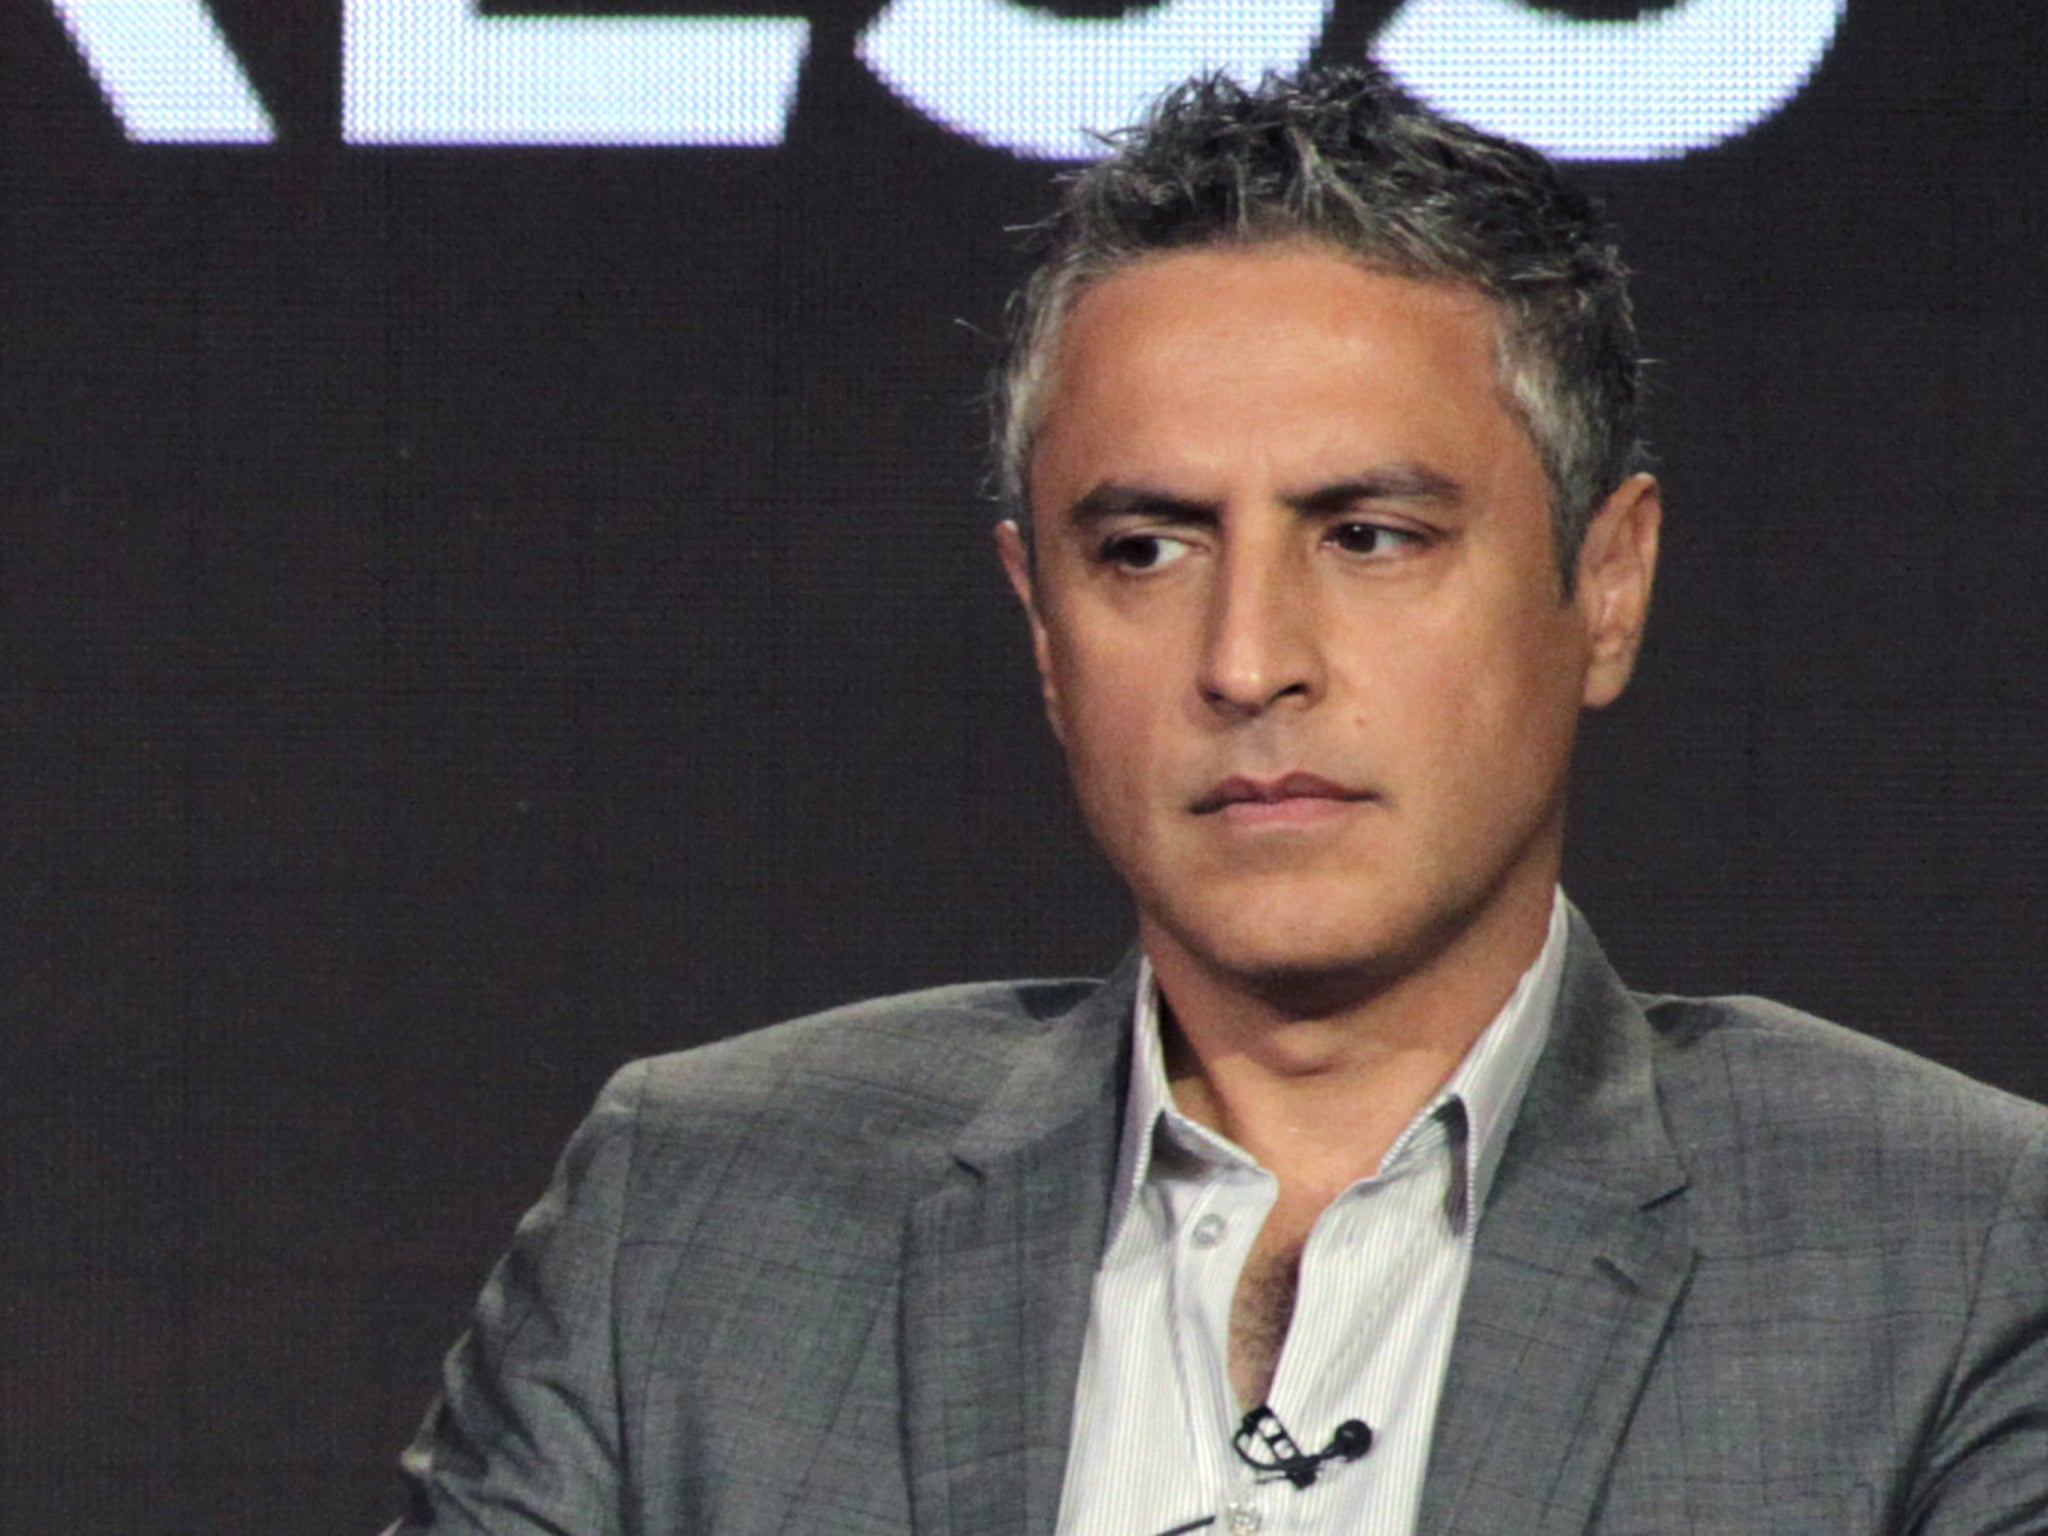 Reza Aslan, host of CNN's 'Believer' programme